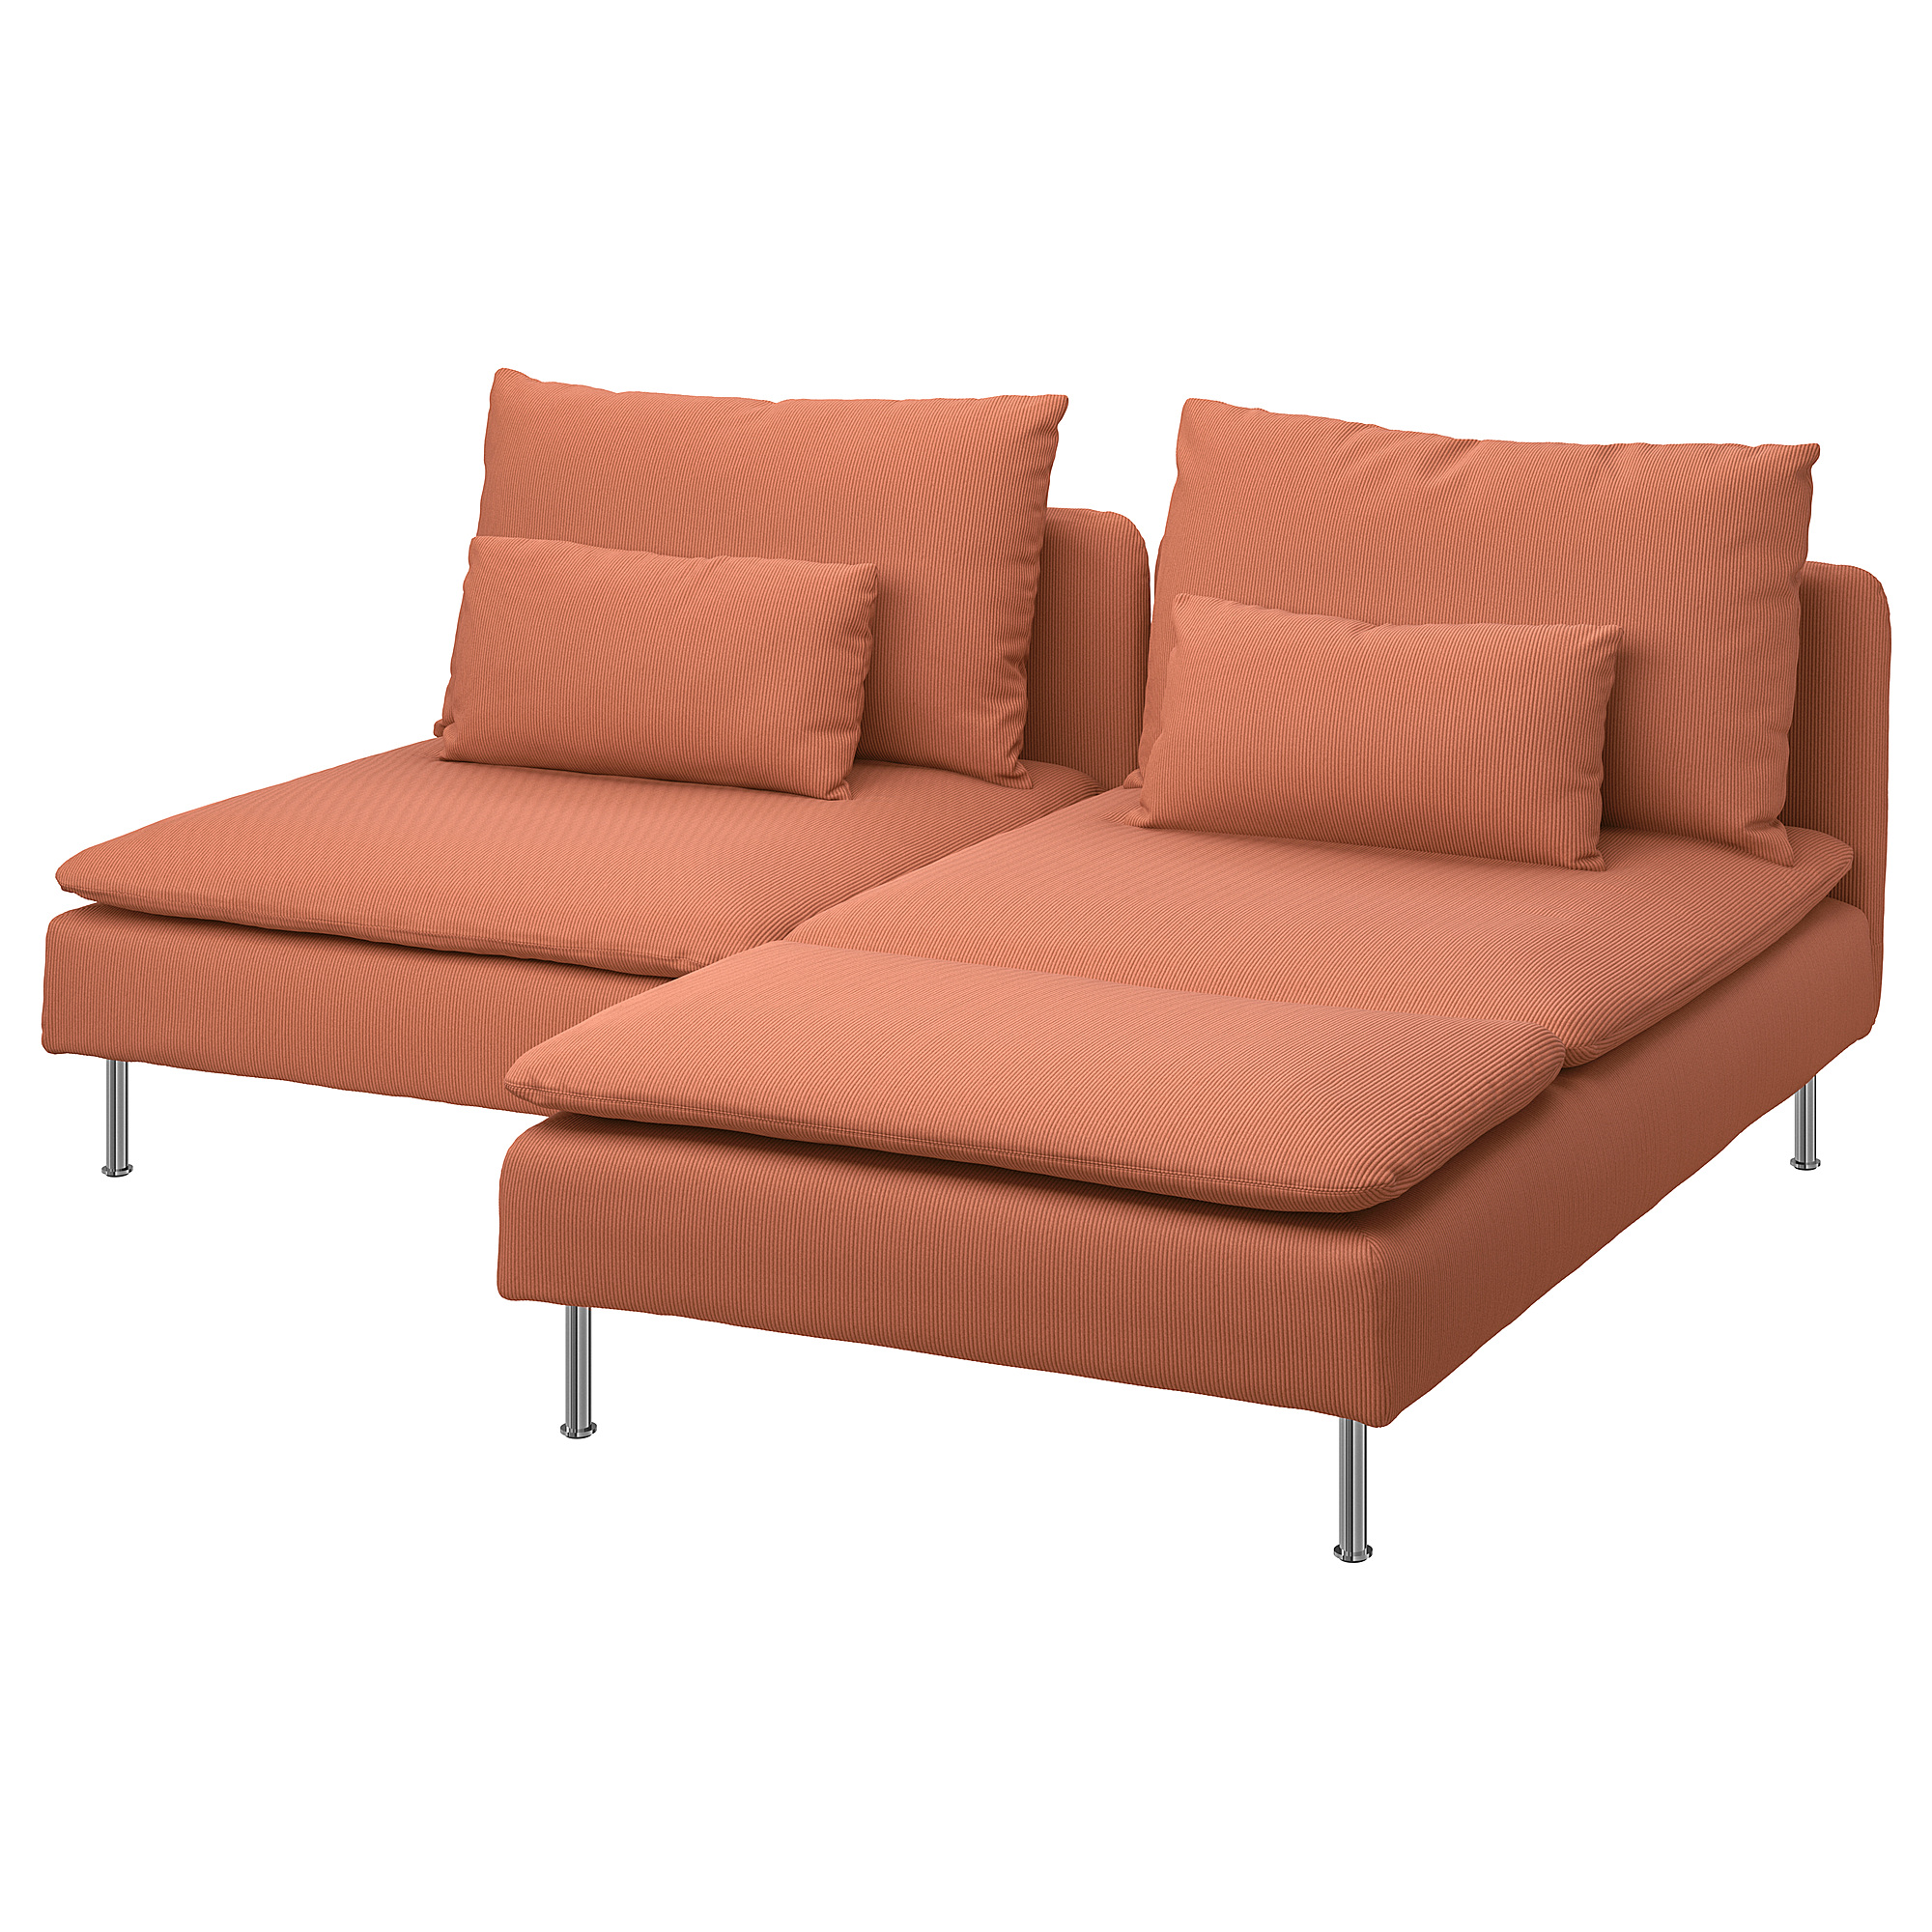 SÖDERHAMN 2-seat sofa with chaise longue